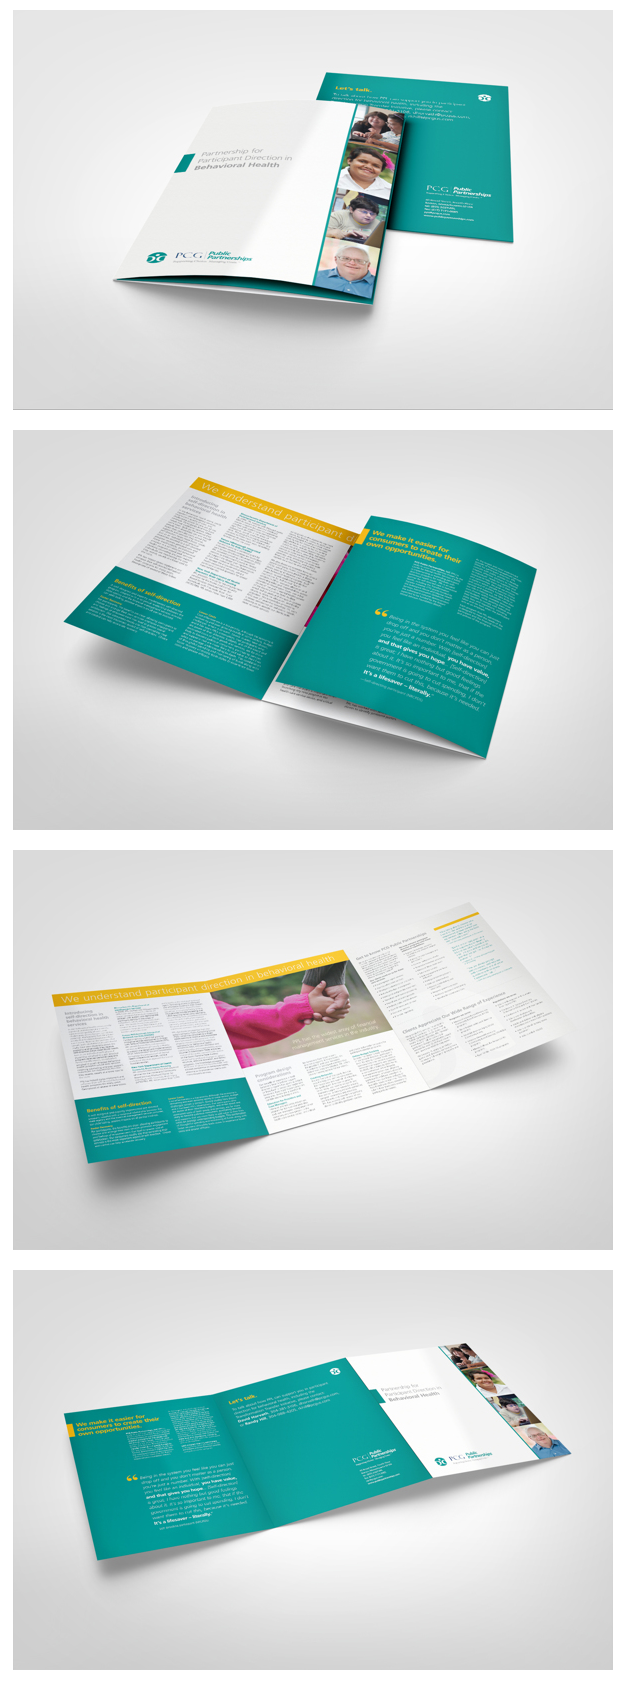 Large format Tri fold Brochure on Behance